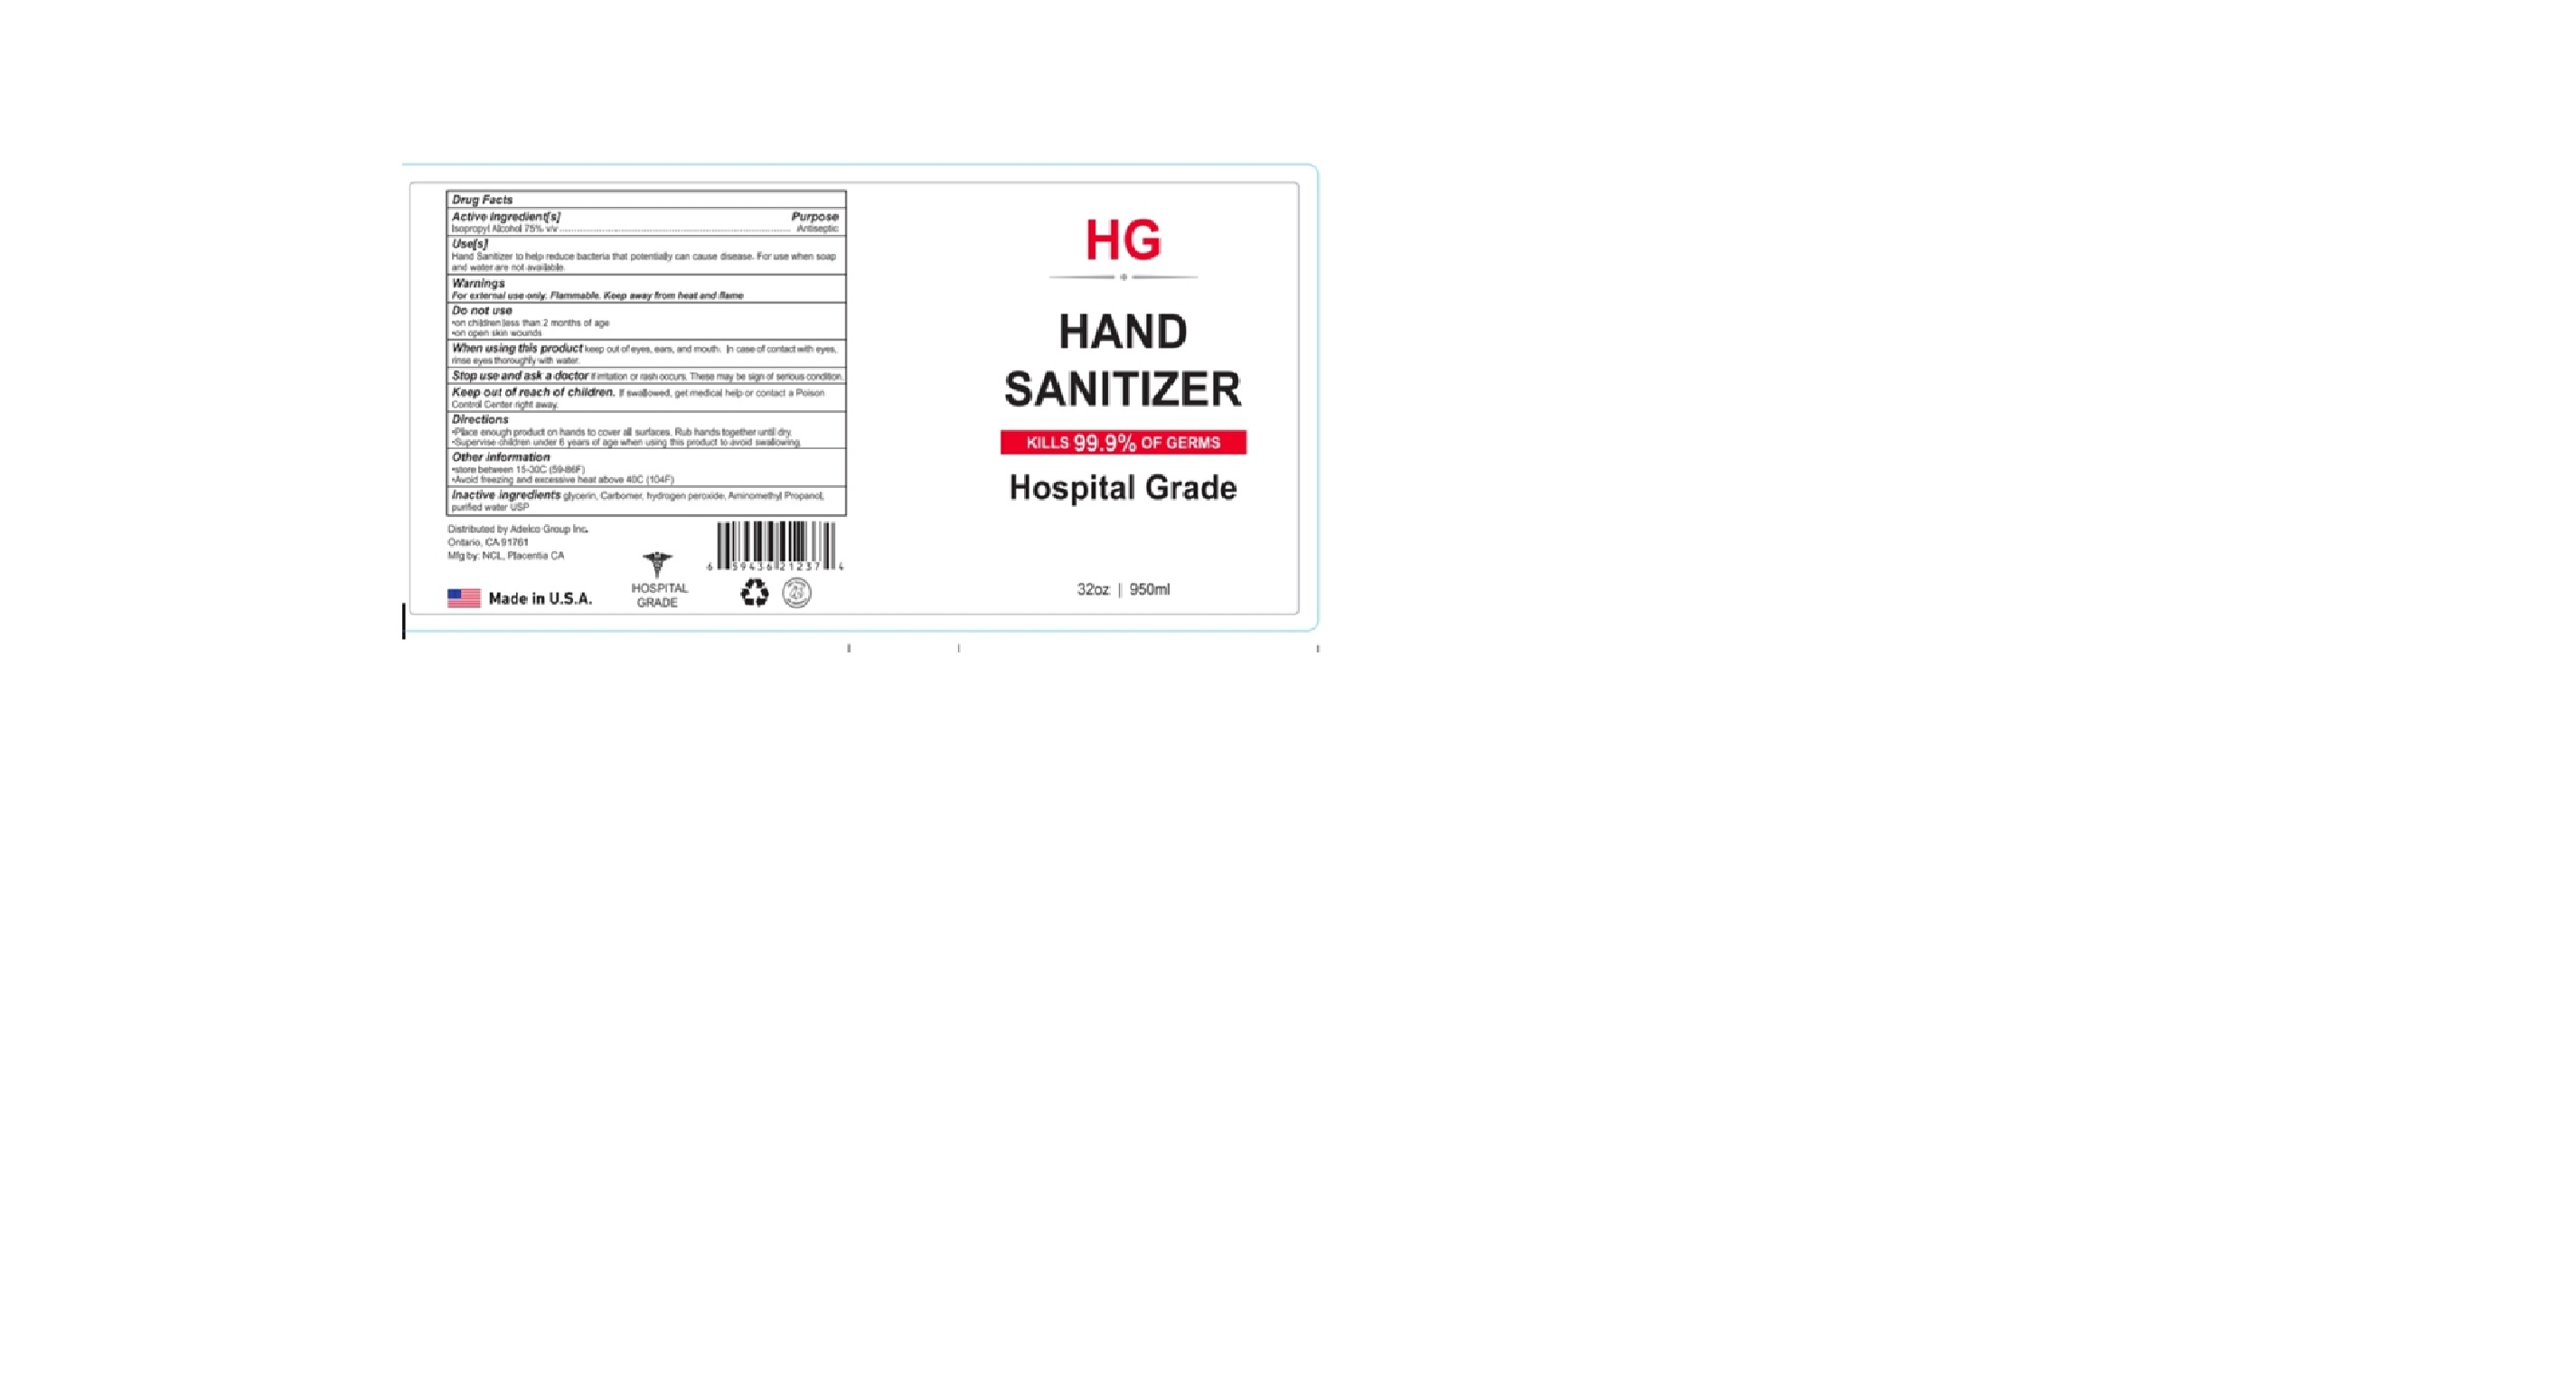 Label-HG HS-950 mL